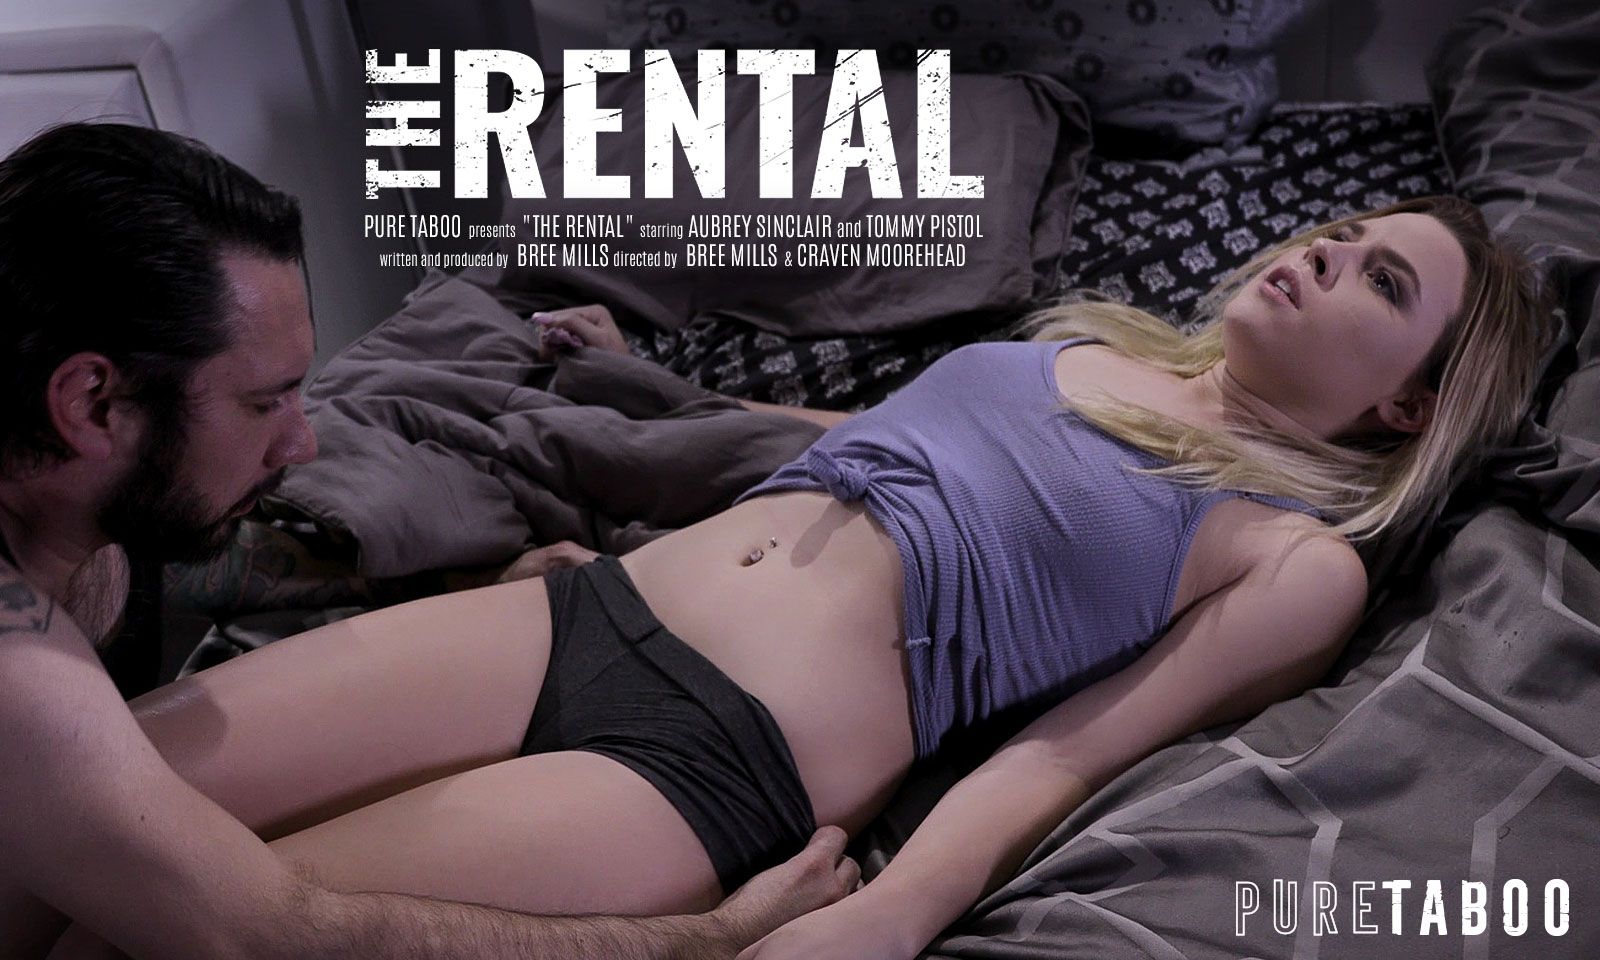 Pure Taboo Peeps into Aubrey Sinclair’s Bedroom in ‘The Rental’